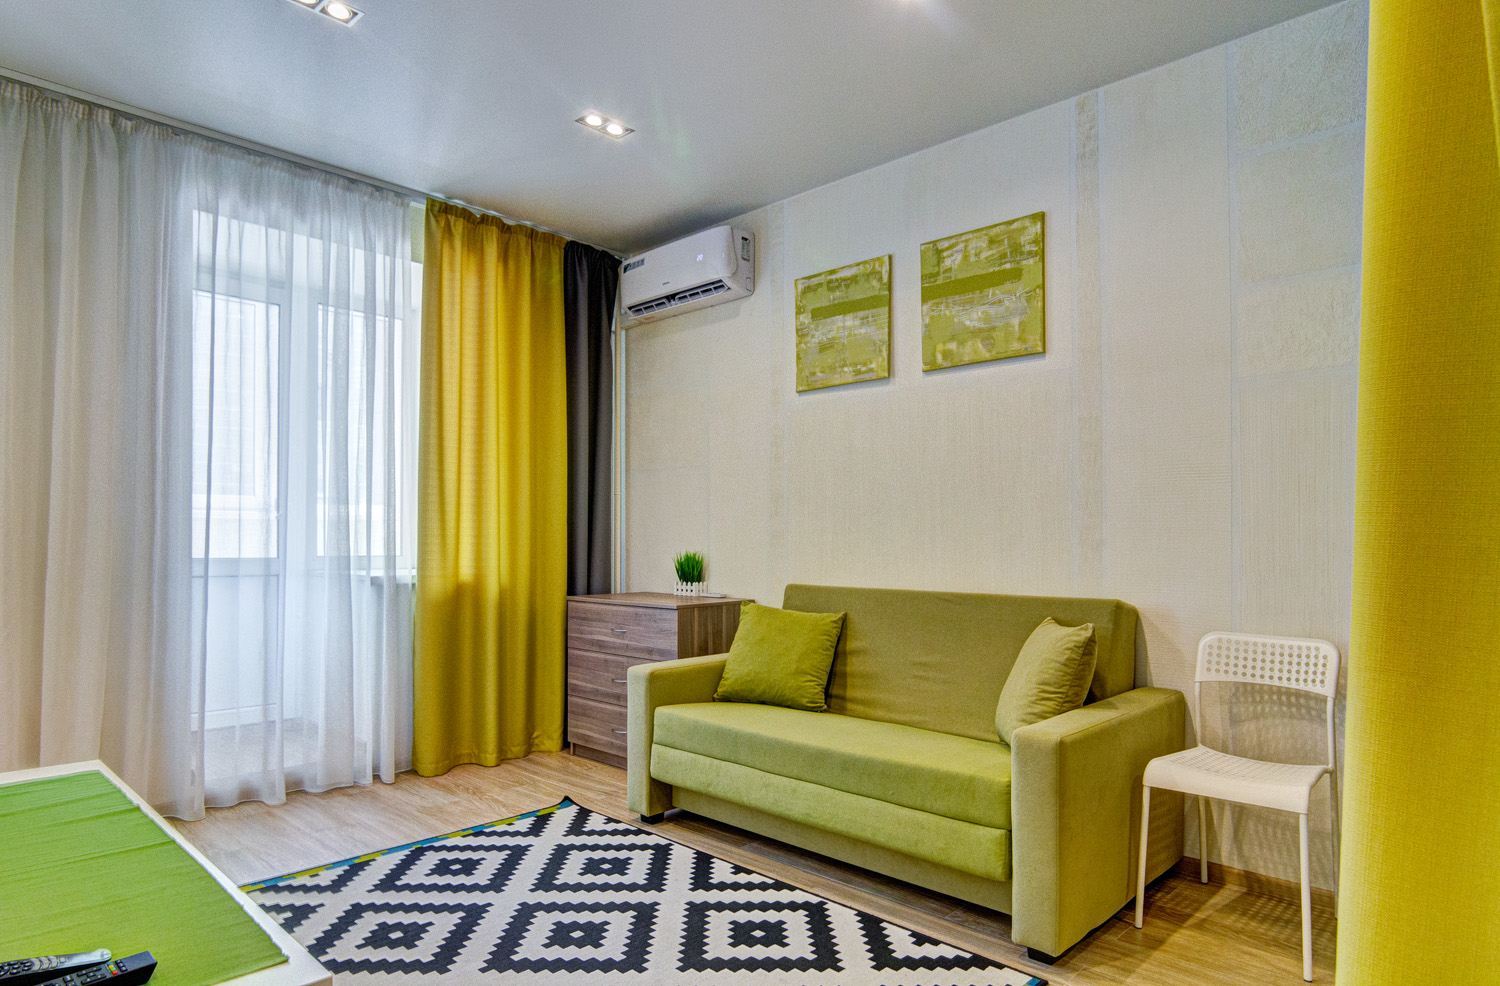 Двухкомнатная квартира на ул. Суворова 161 (45кв.м)до 4 гостей